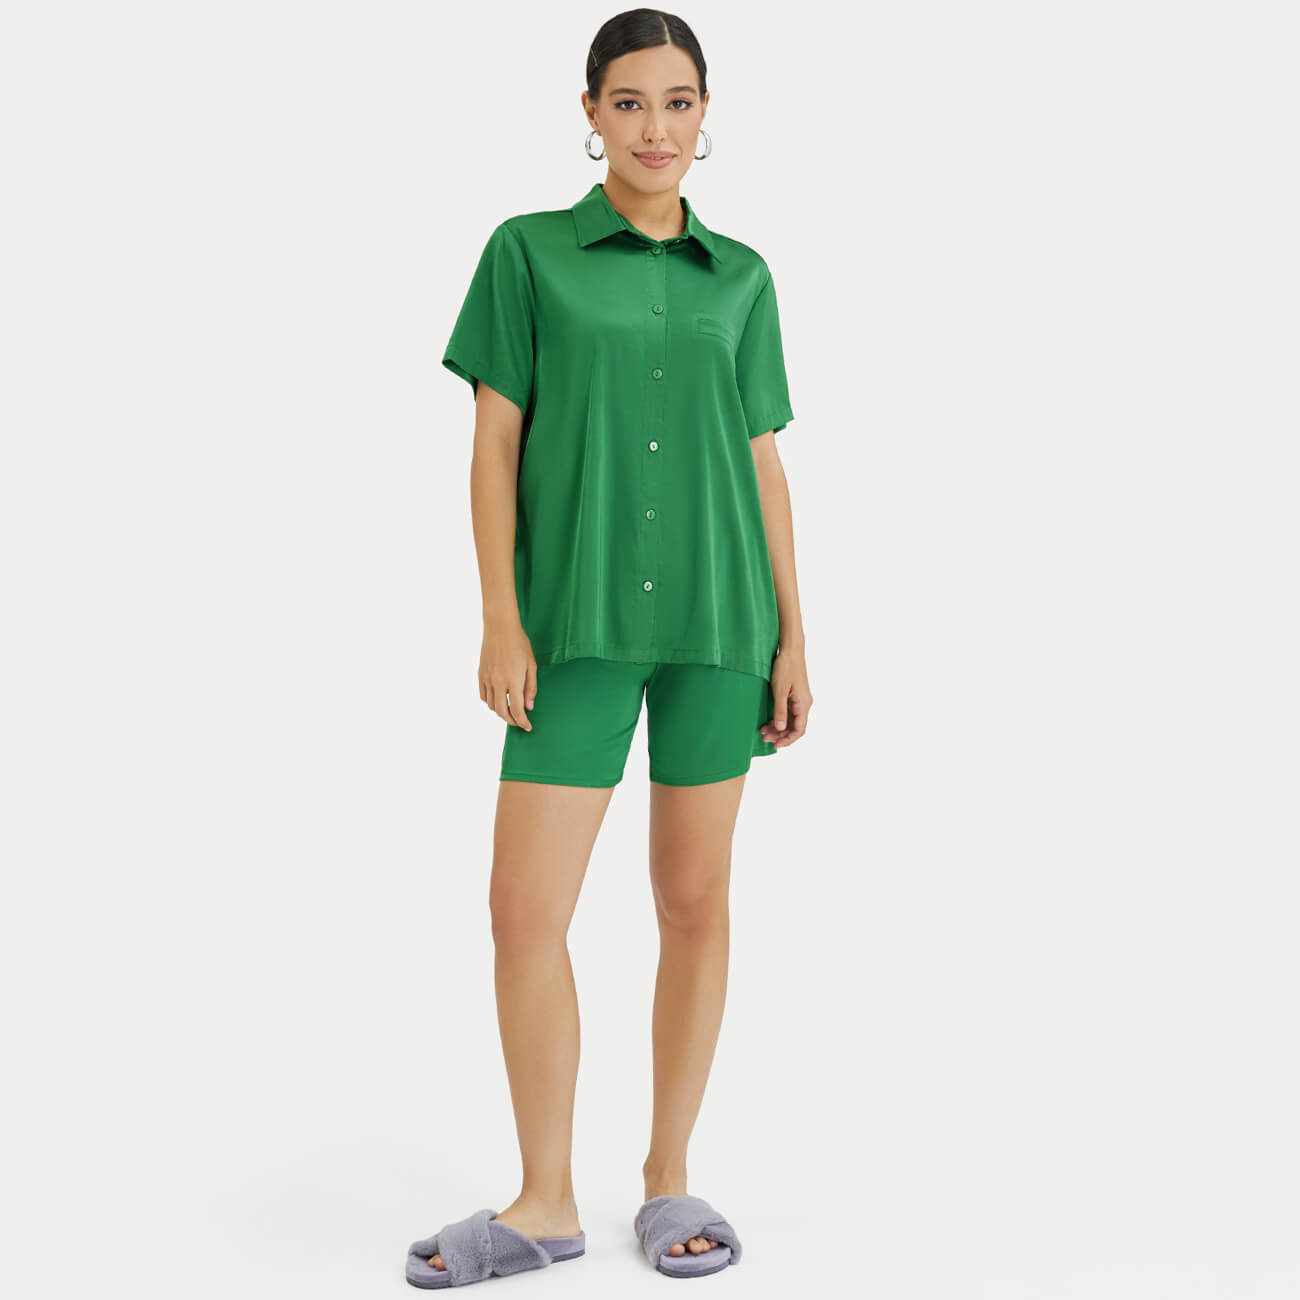 Шорты женские, р. XL, полиэстер/эластан, зеленые, Madeline женские шорты без принта pieces